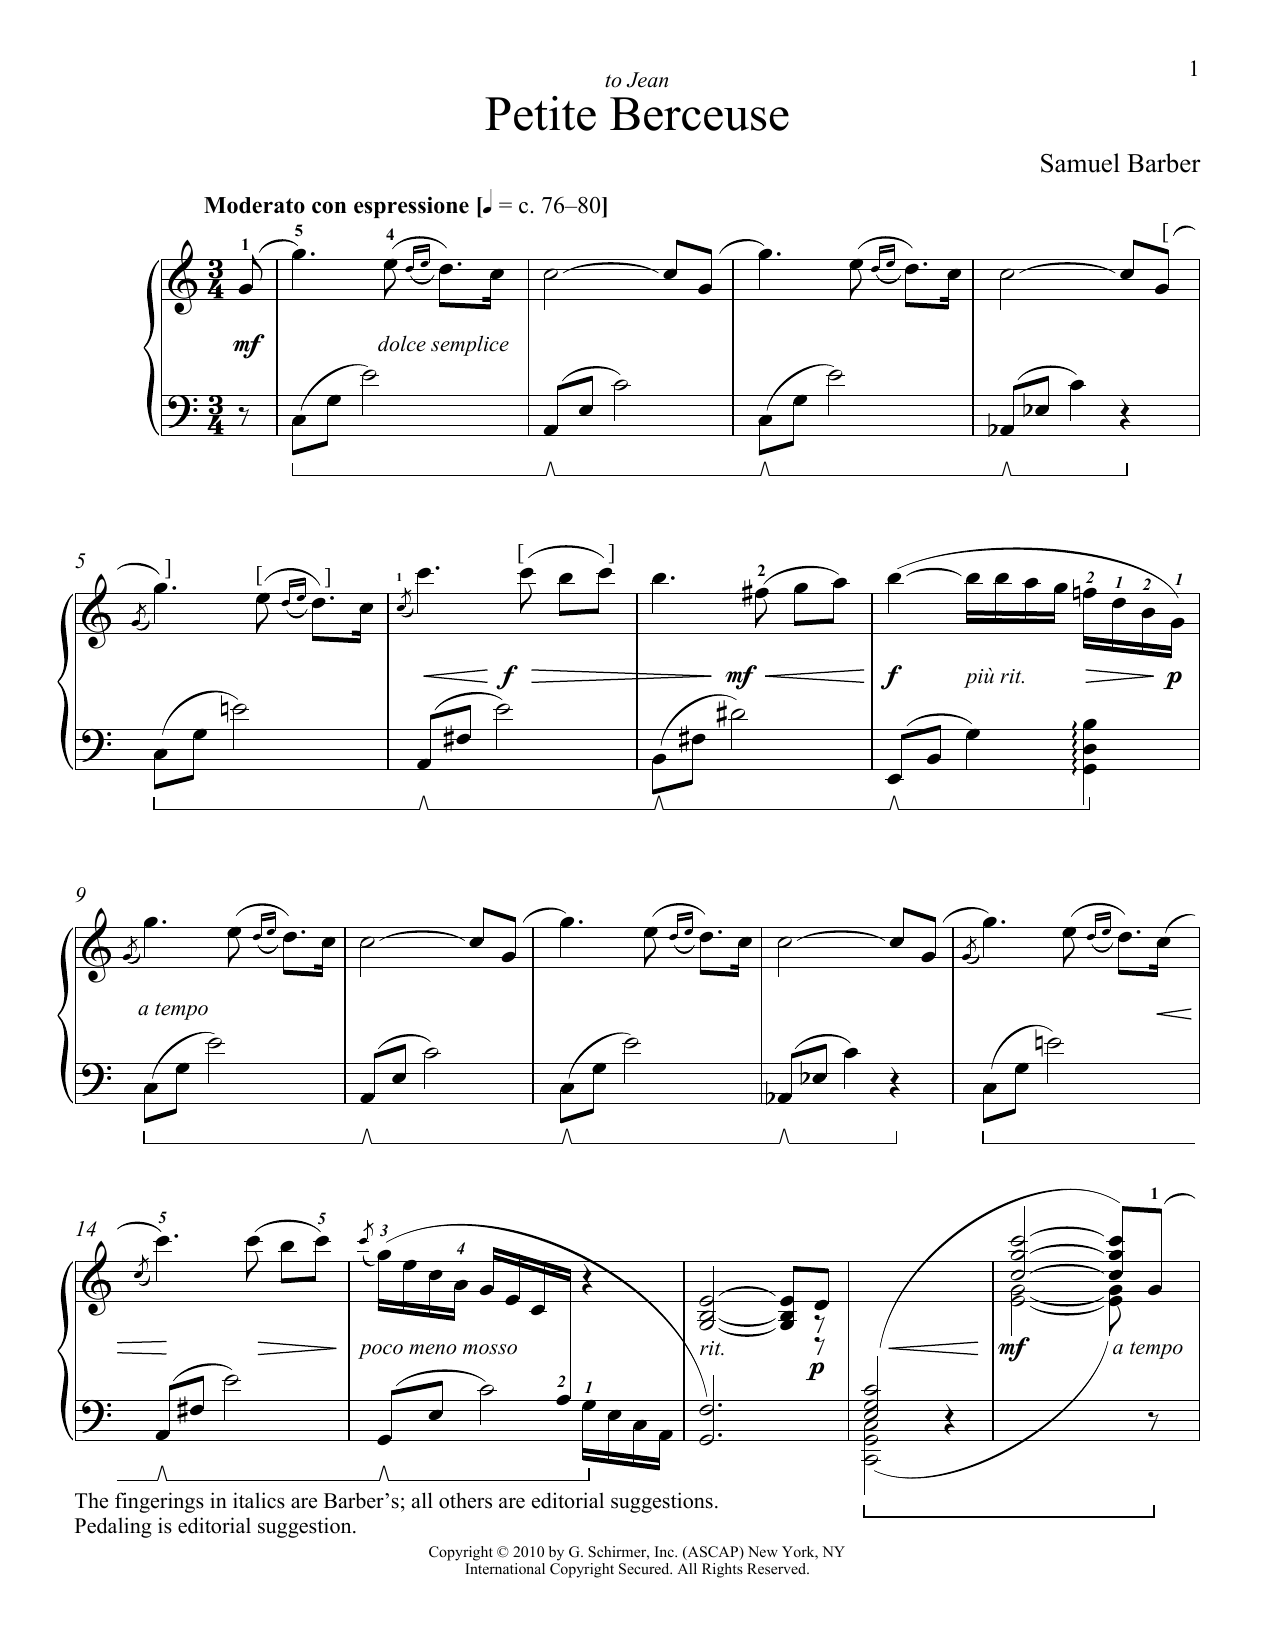 Samuel Barber Petite Berceuse Sheet Music Notes & Chords for Piano - Download or Print PDF